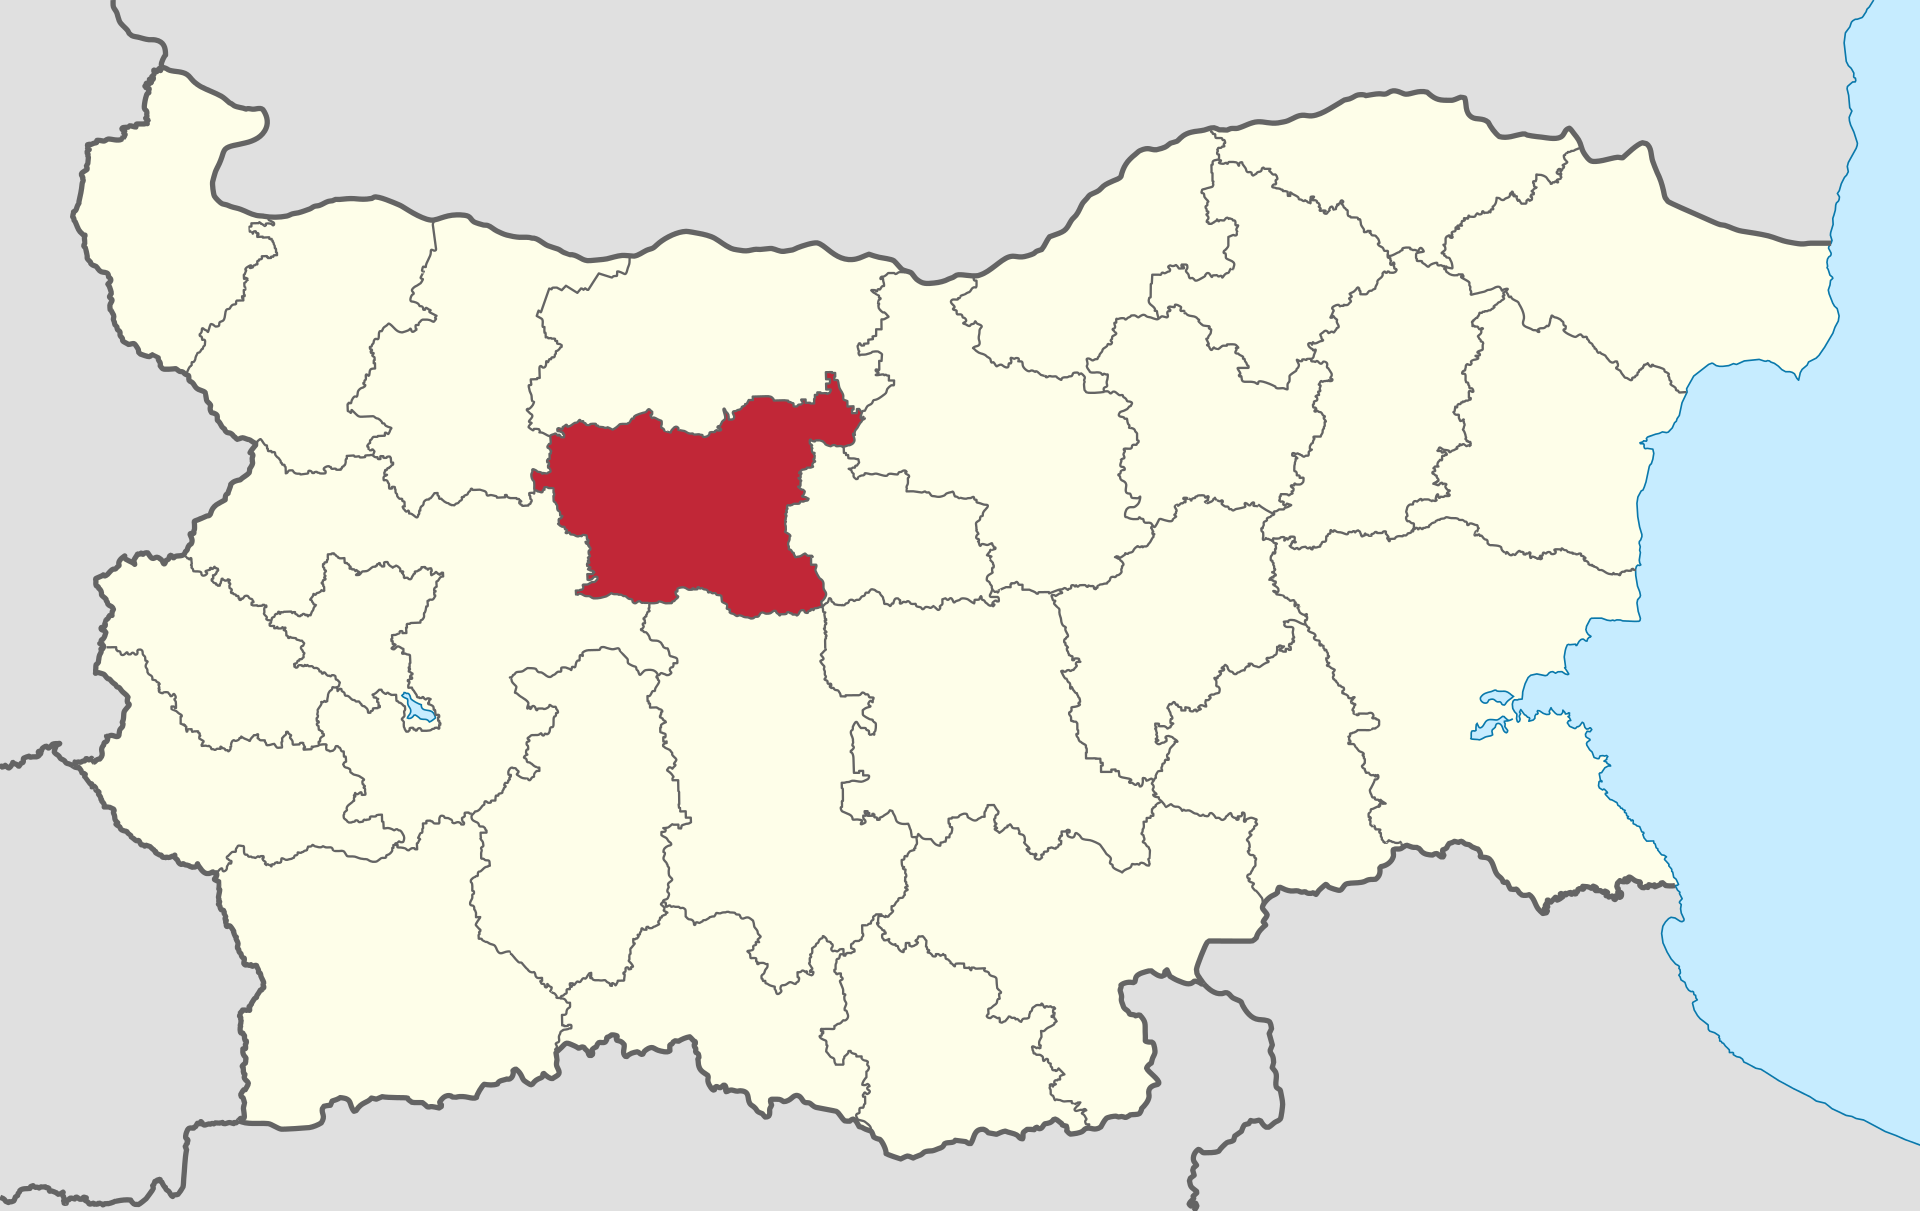 Mig School Urbex location or around the region Lovec, Bulgaria